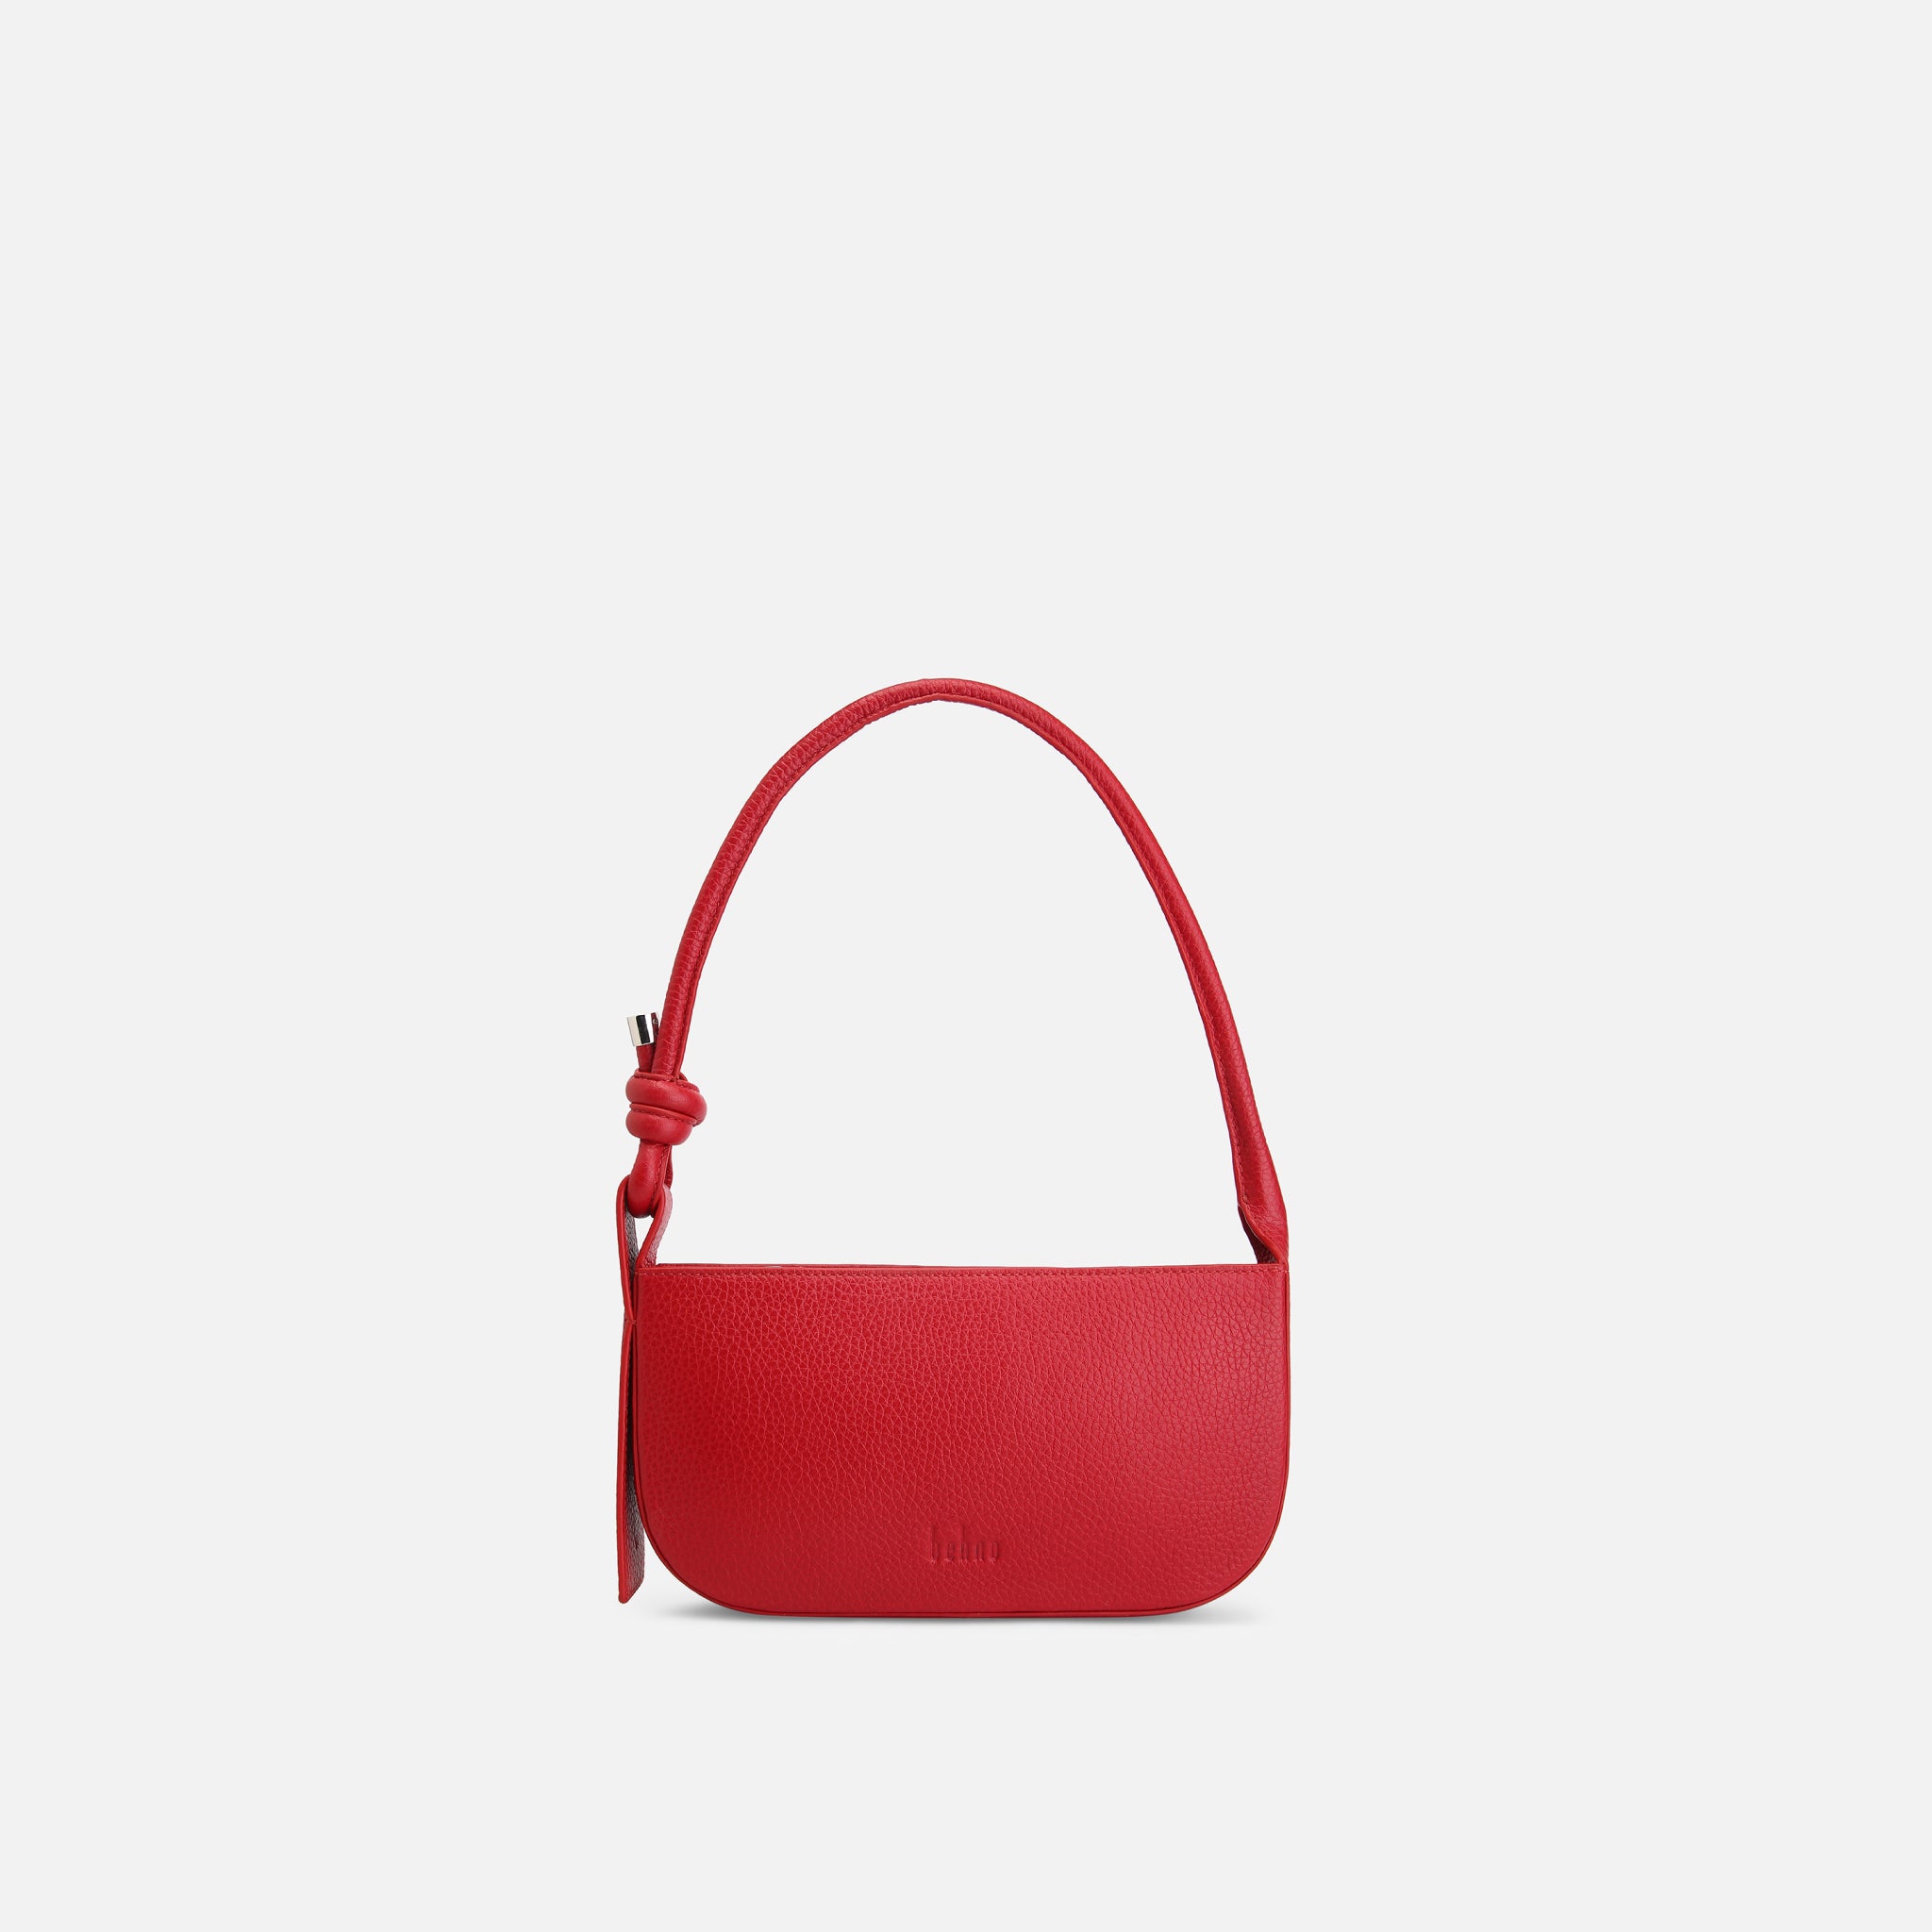 LOVEVOOK Handbags for Women Shoulder Bags Tote Satchel Hobo India | Ubuy